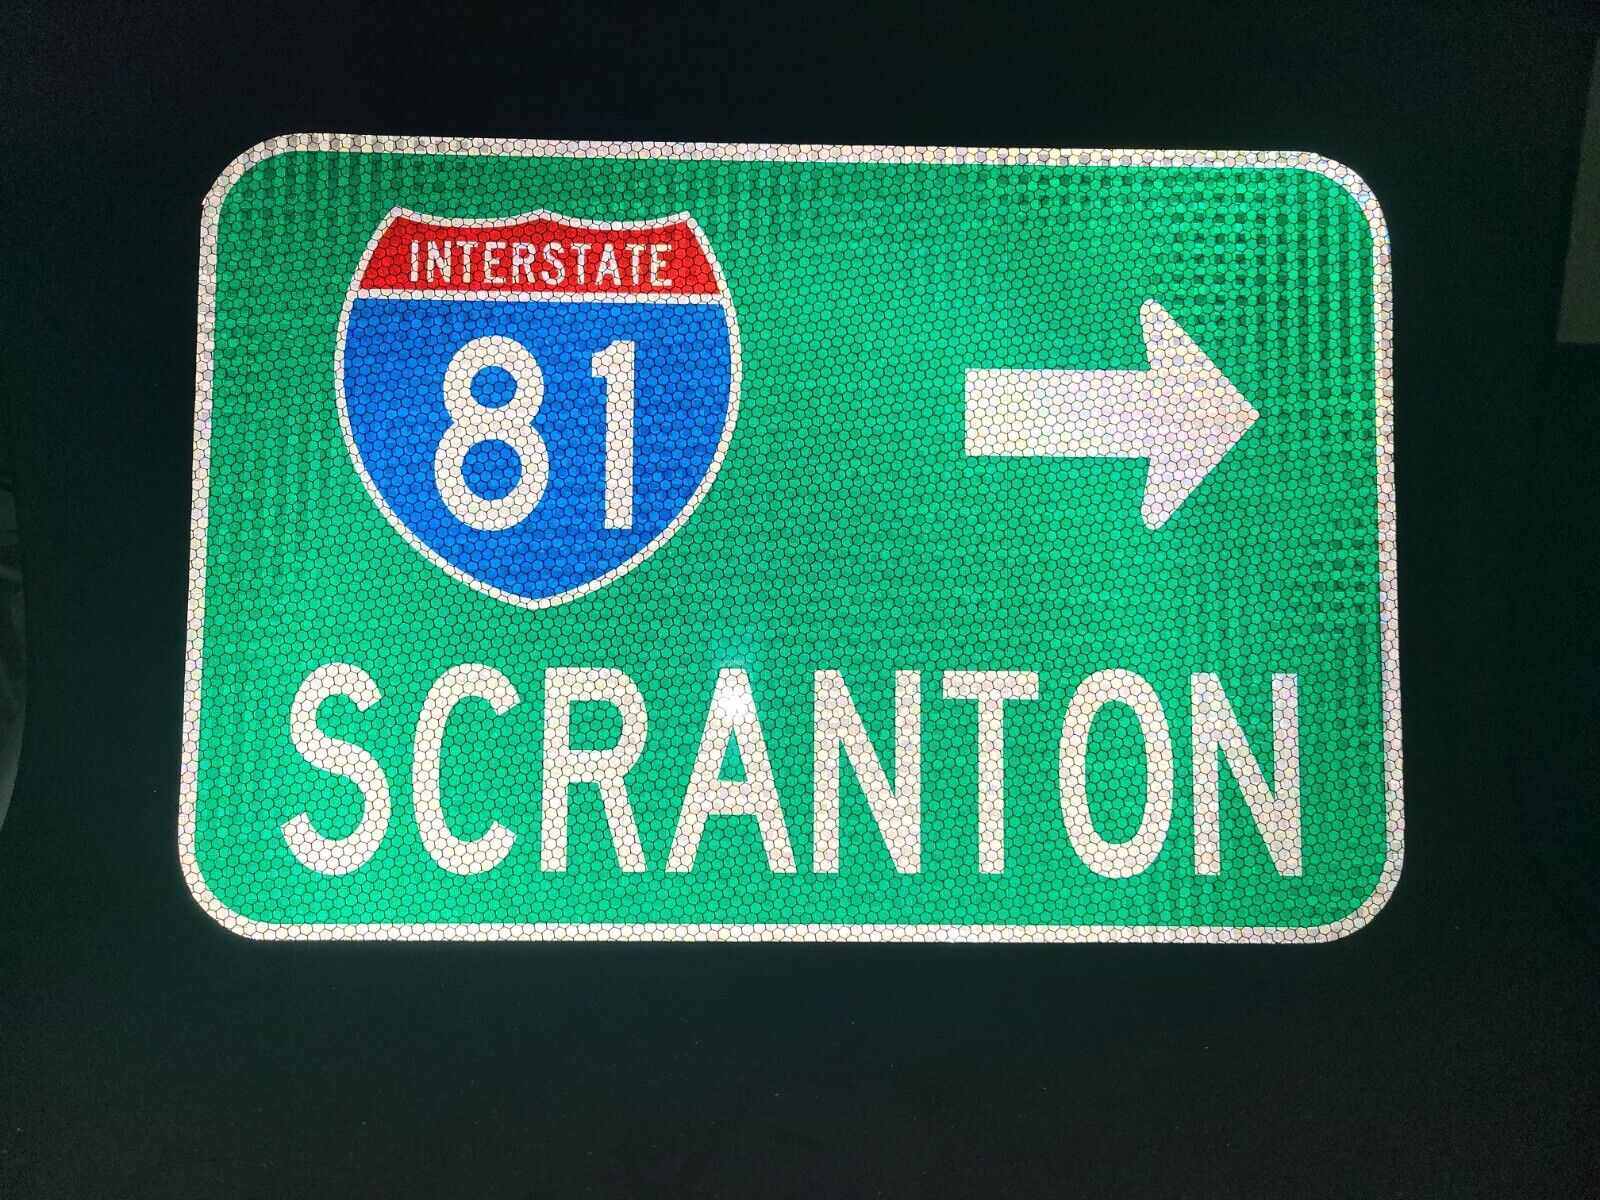 SCRANTON Interstate 81, Pennsylvania route road sign 18